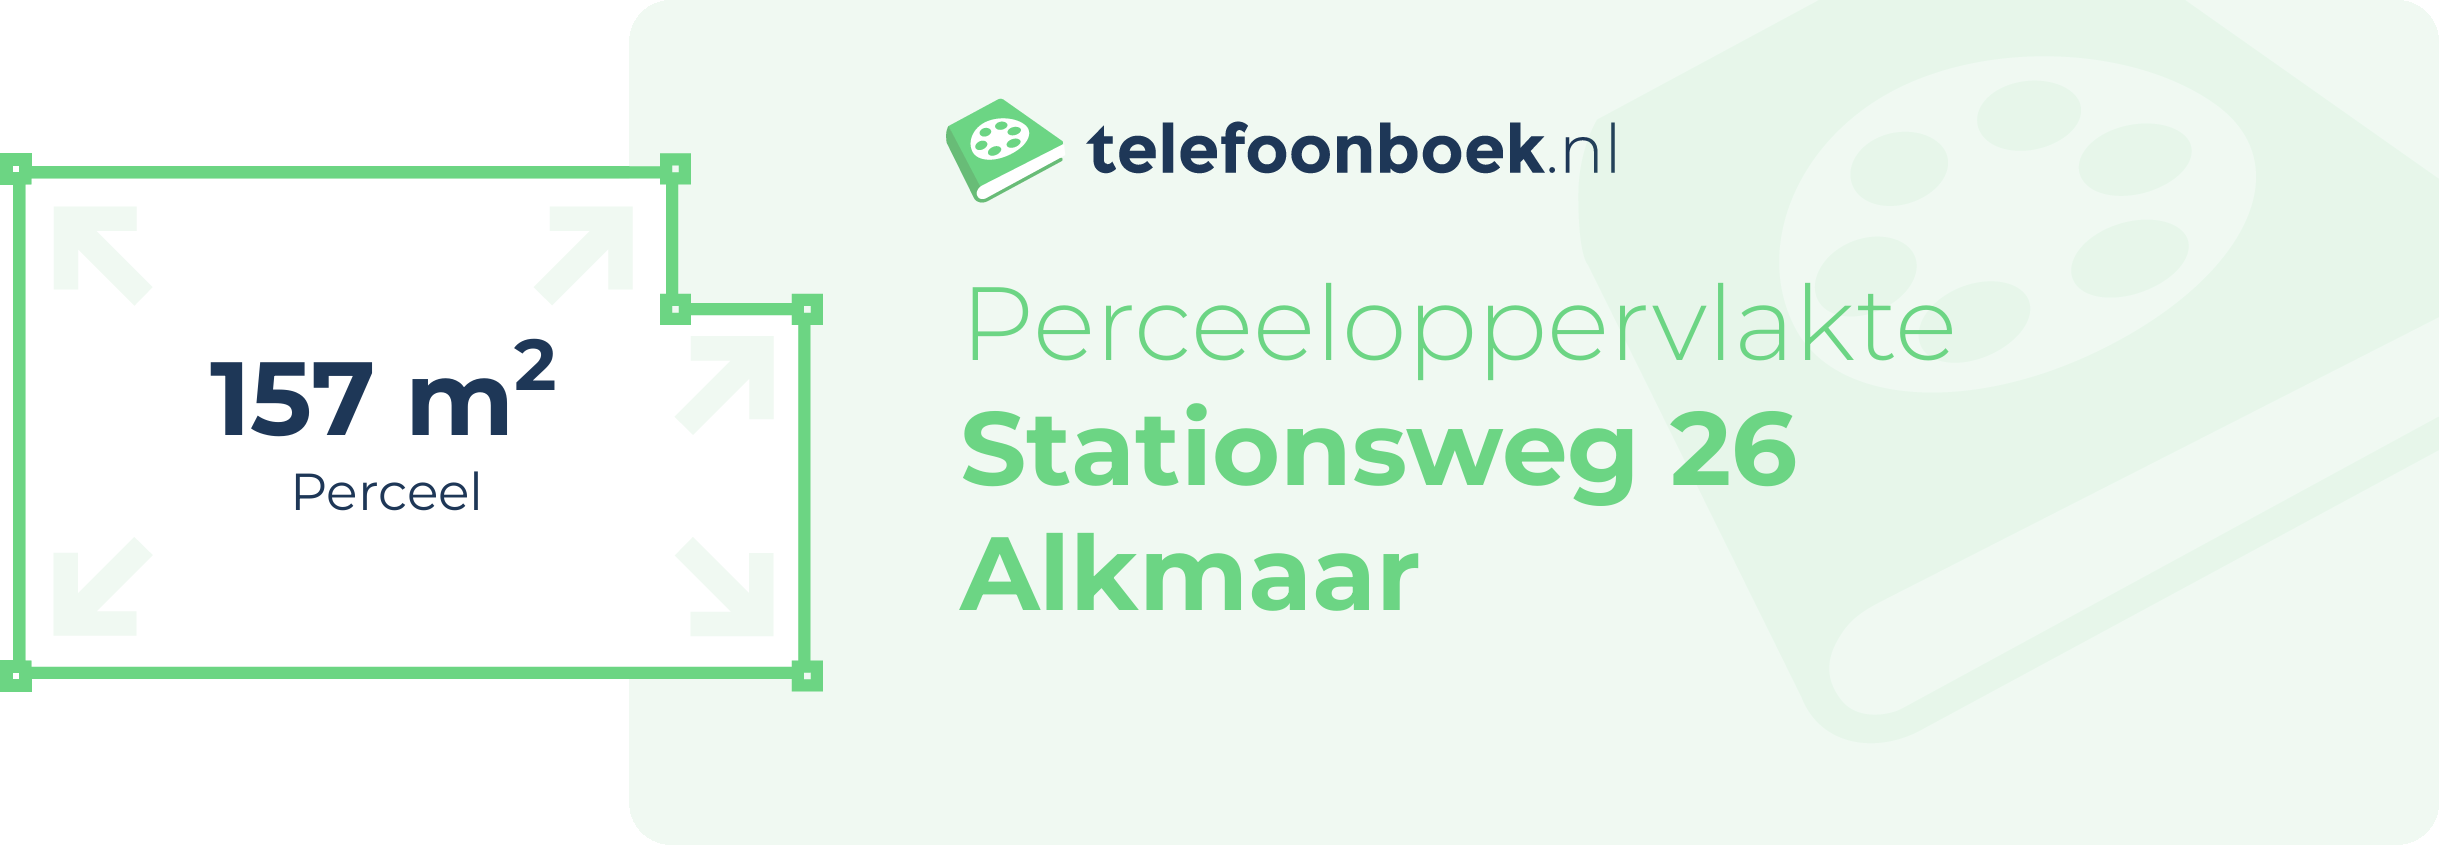 Perceeloppervlakte Stationsweg 26 Alkmaar